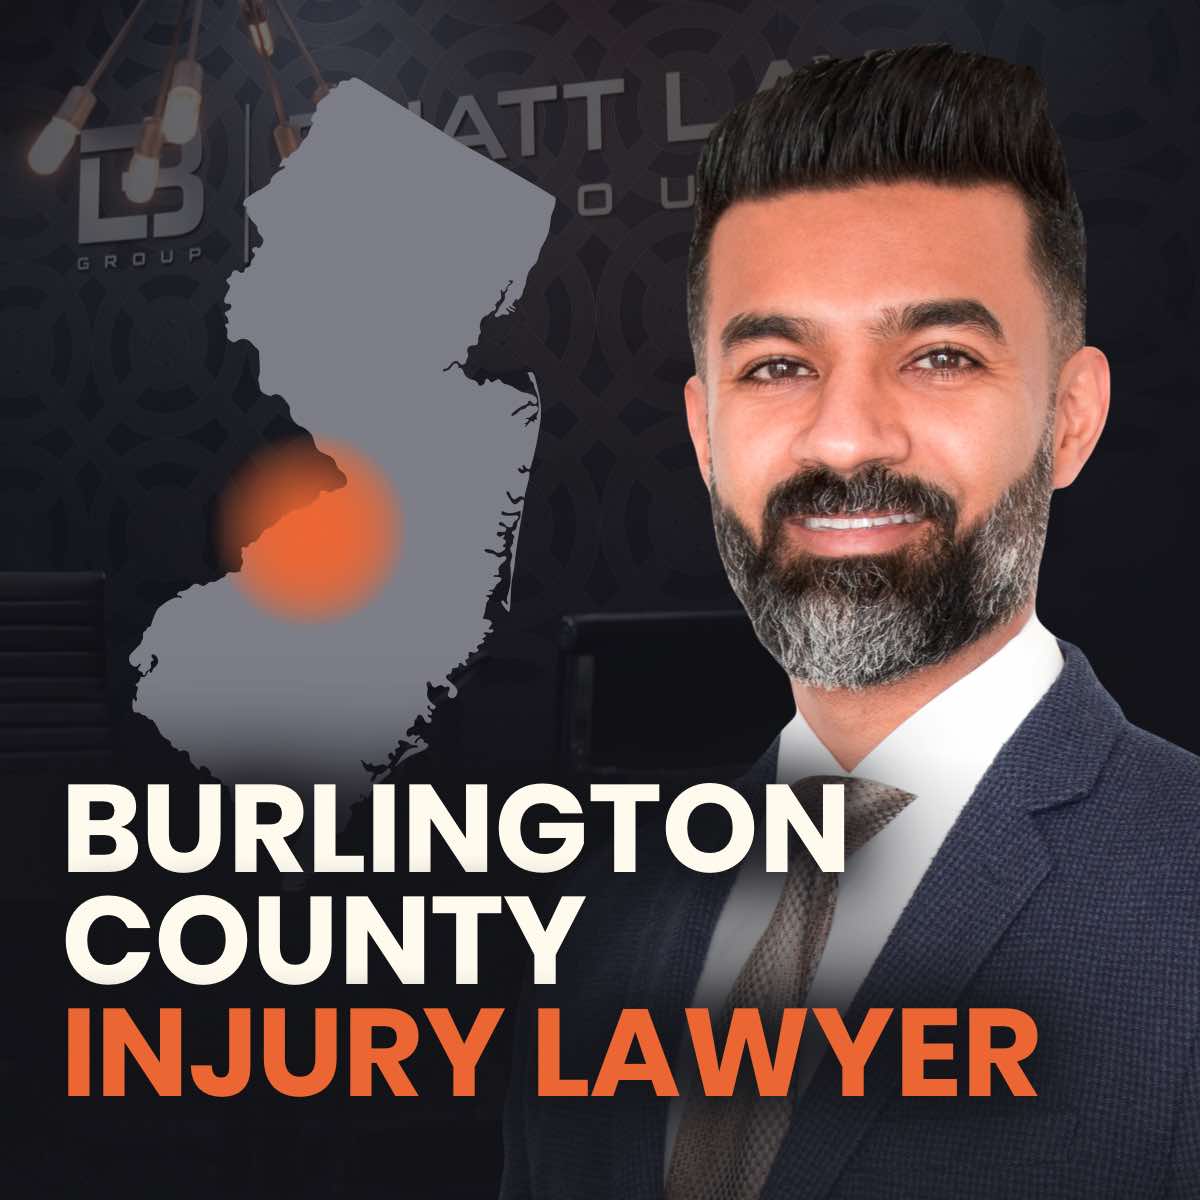 Camden County injury lawyer